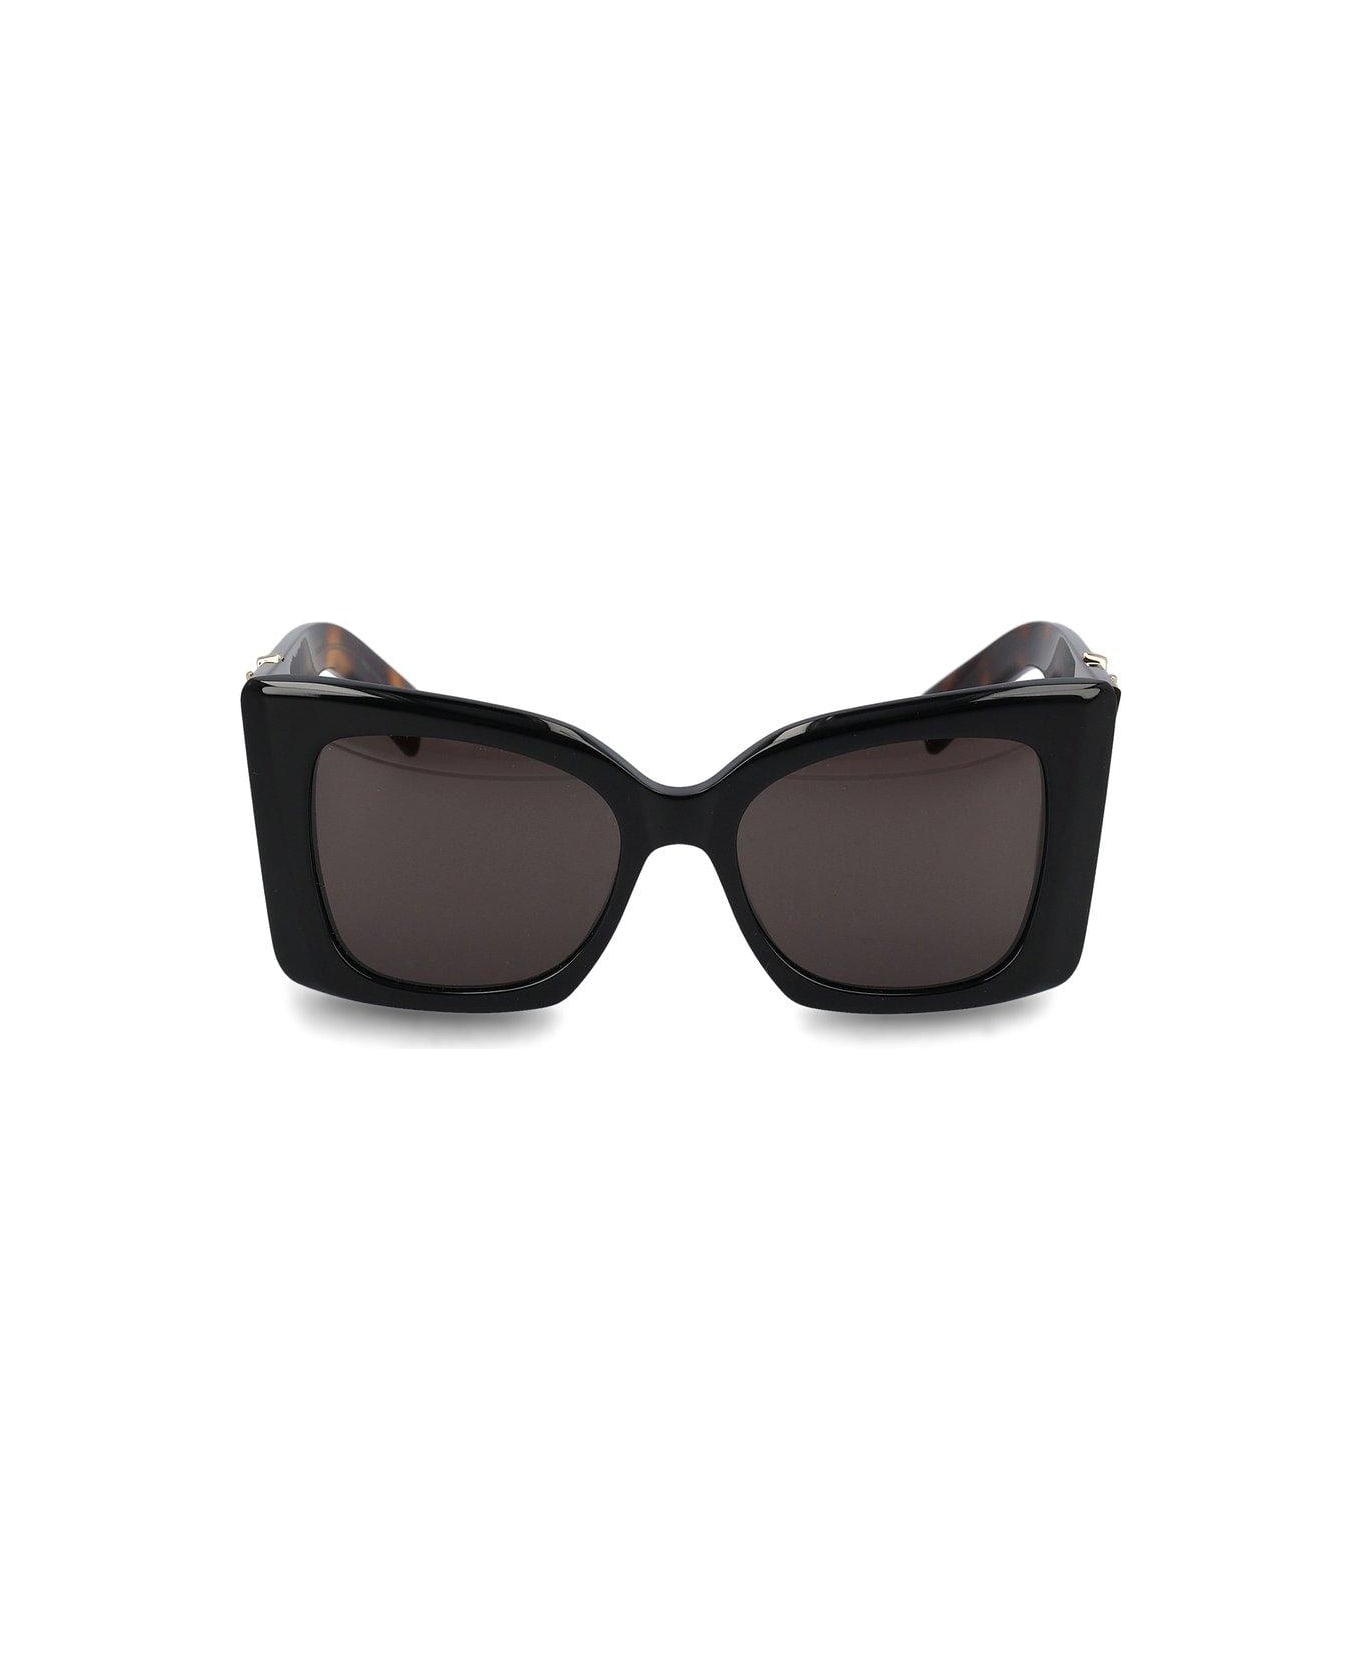 Saint Laurent Eyewear Square Frame Sunglasses - Black Havana/brown